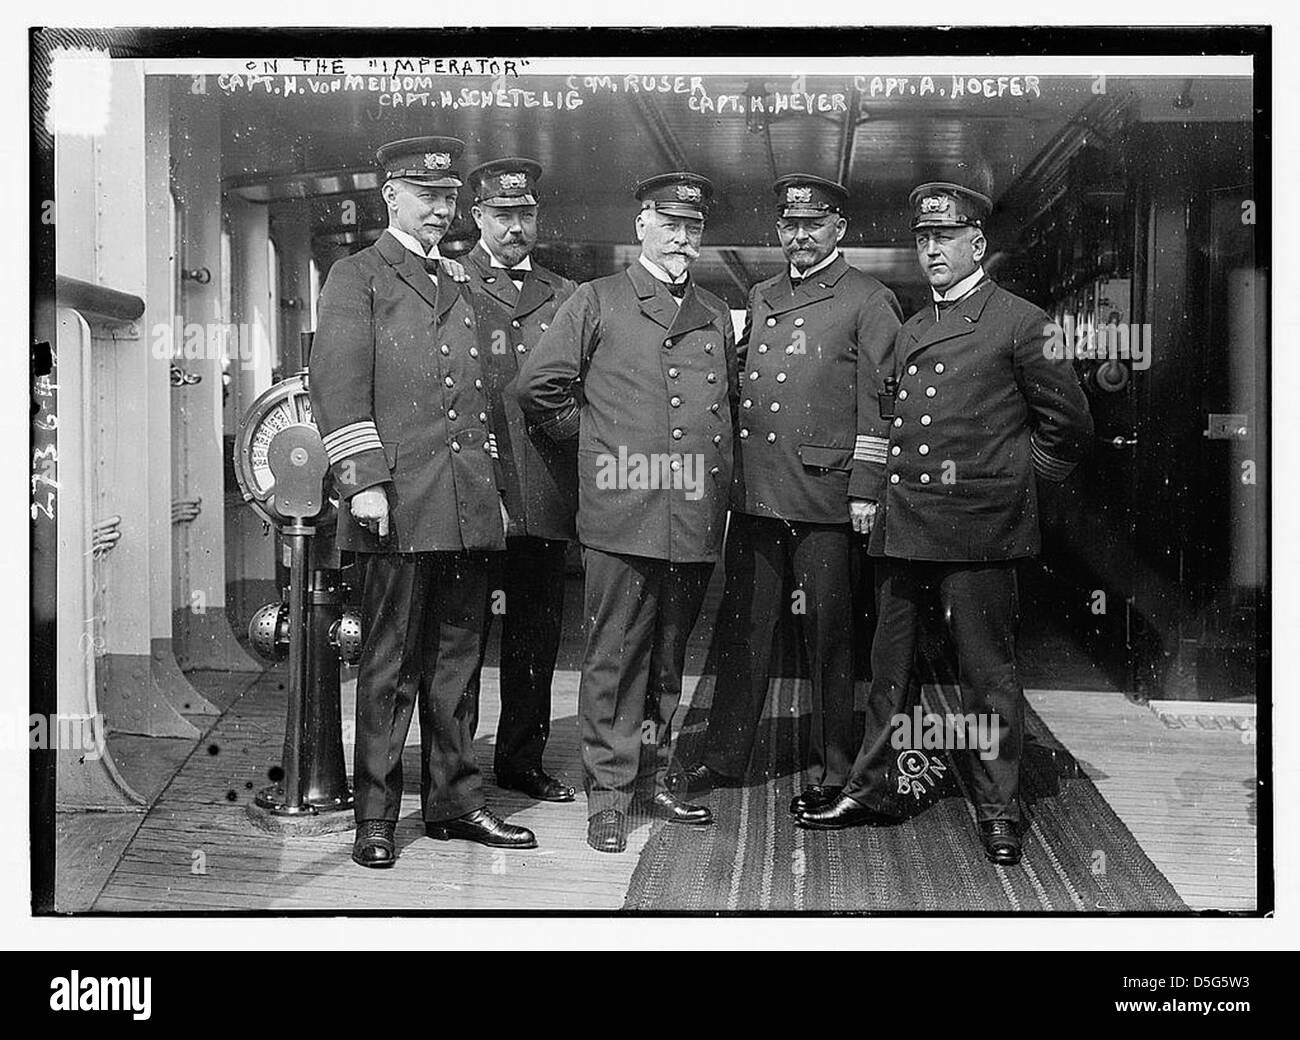 On the IMPERATOR, Capt. H. von Meibom, Com. Ruser, Capt. A. Hoefer, Capt. H. Schetelig, Capt. K. Meyer (LOC) Stock Photo